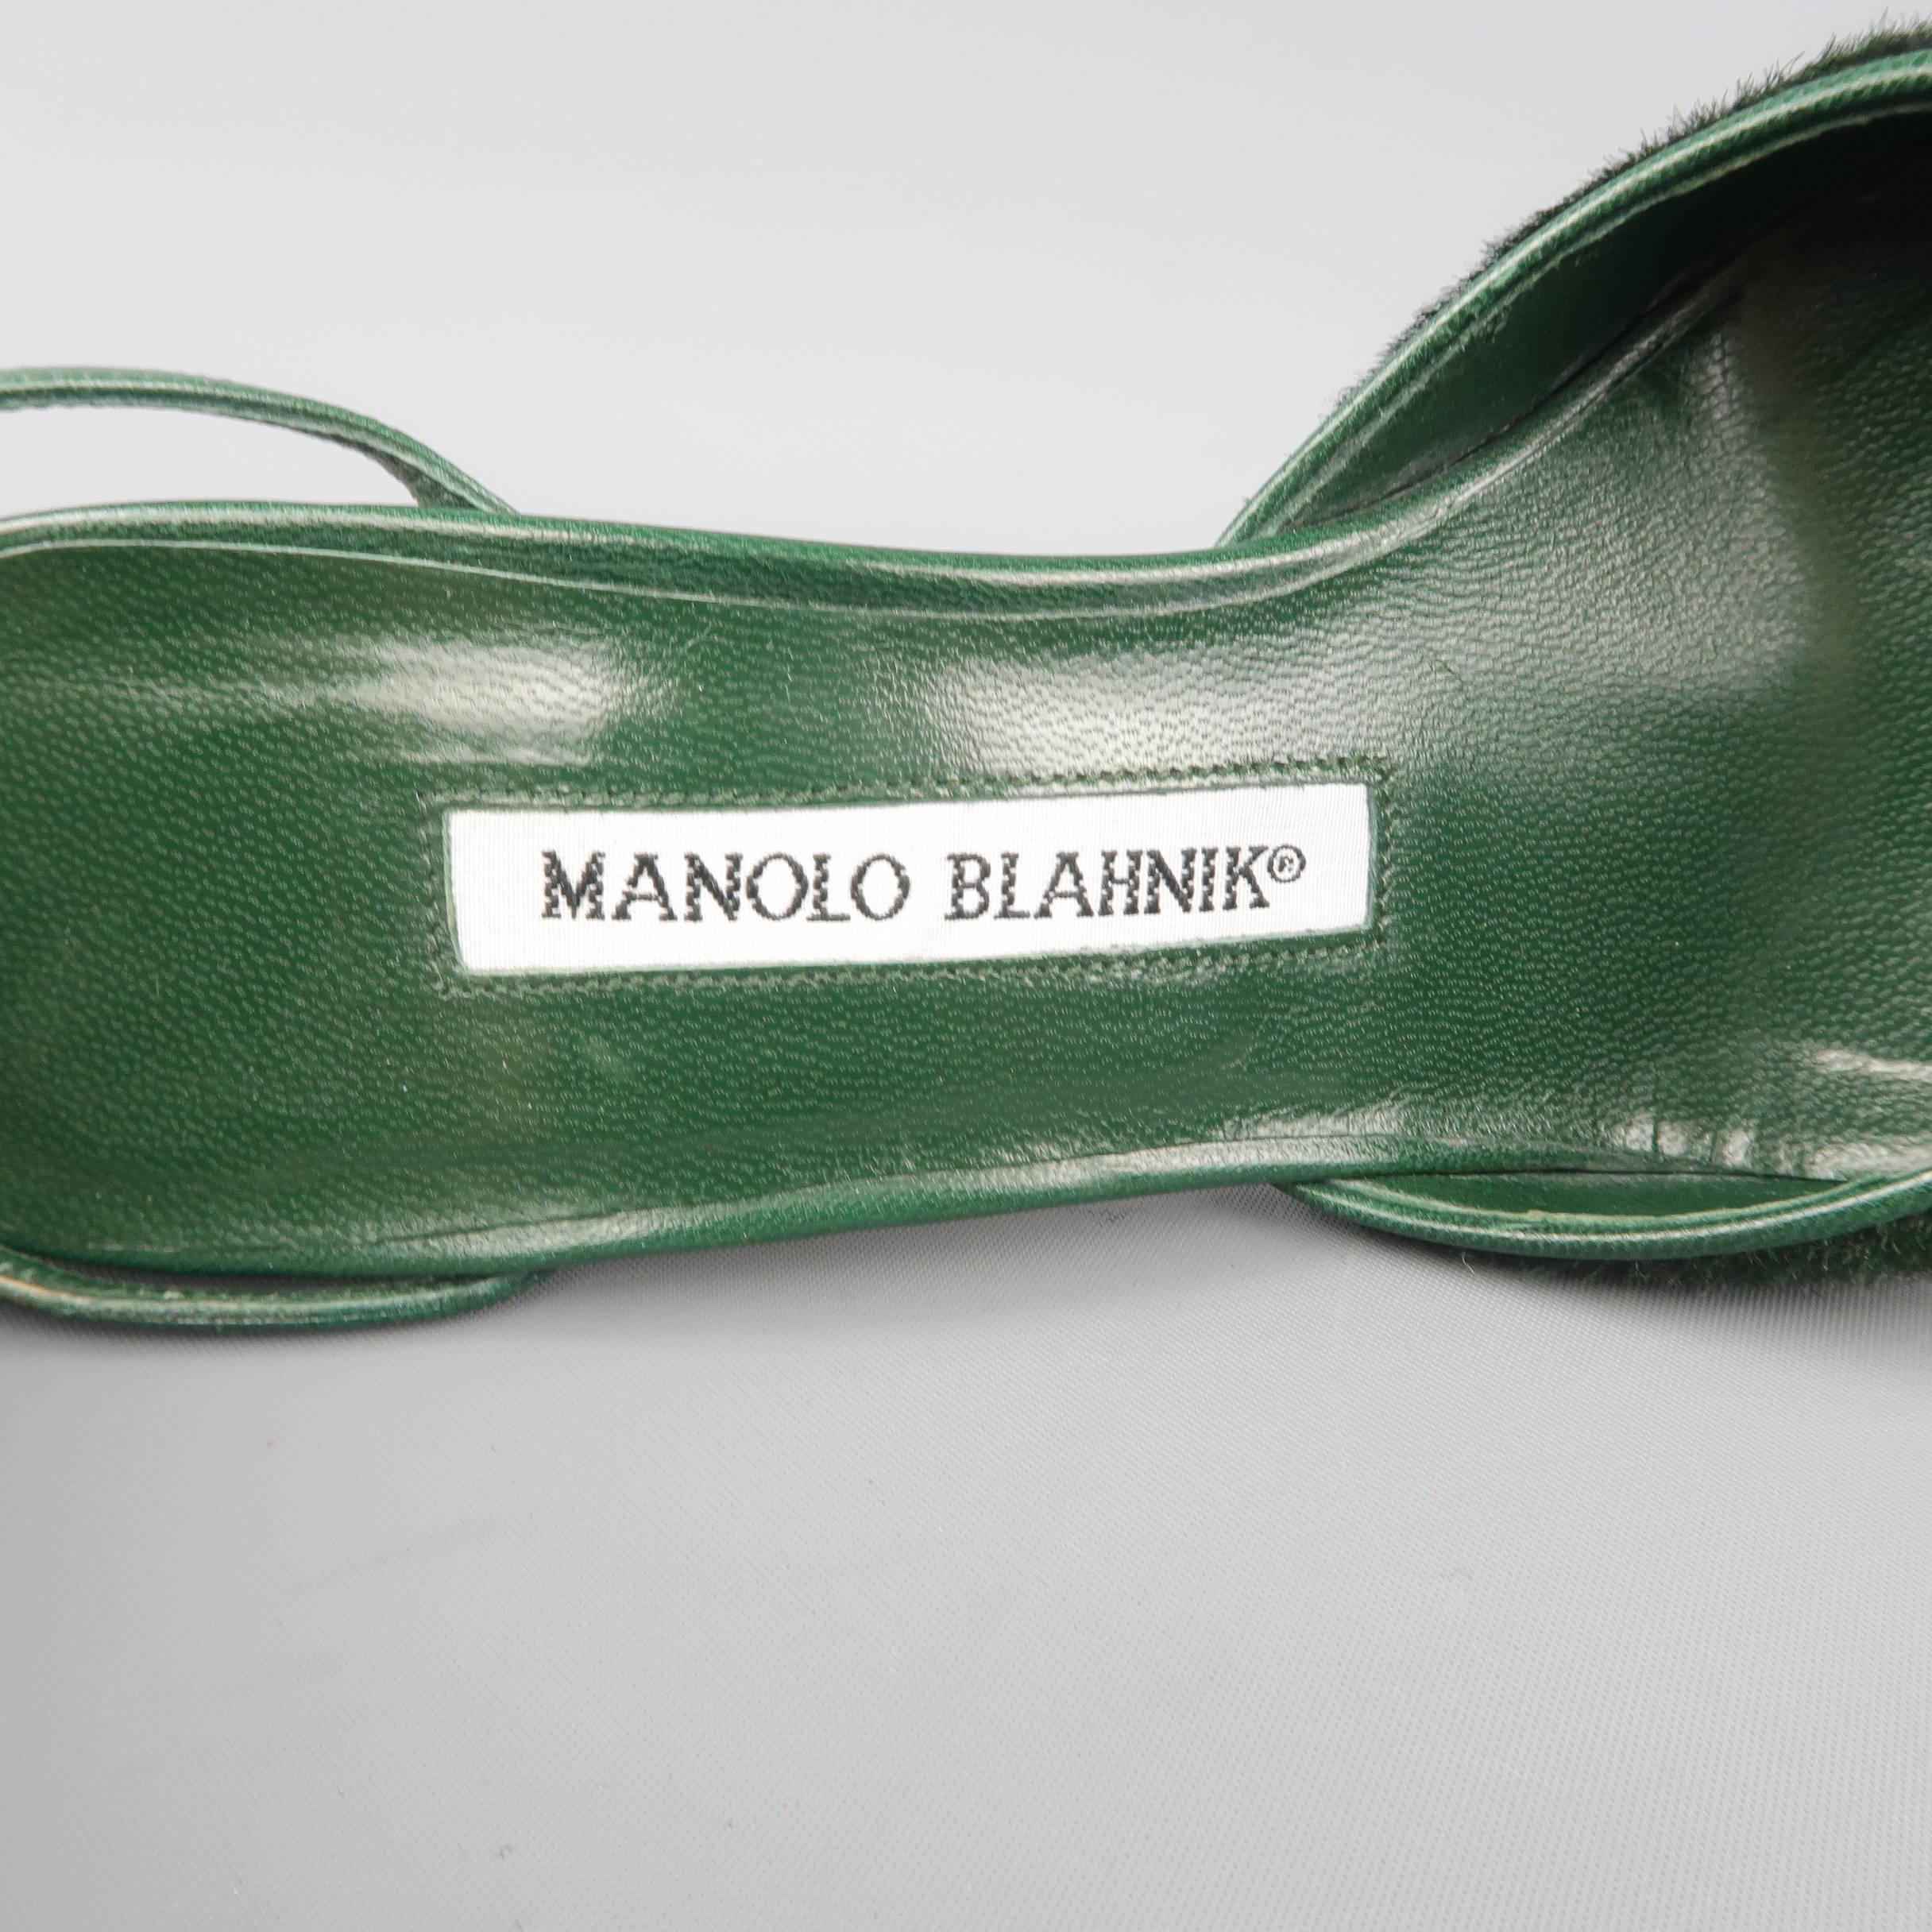 Black MANOLO BLAHNIK Pumps Heels Size 5.5  - Green Ponyhair & Leather Ankle Strap